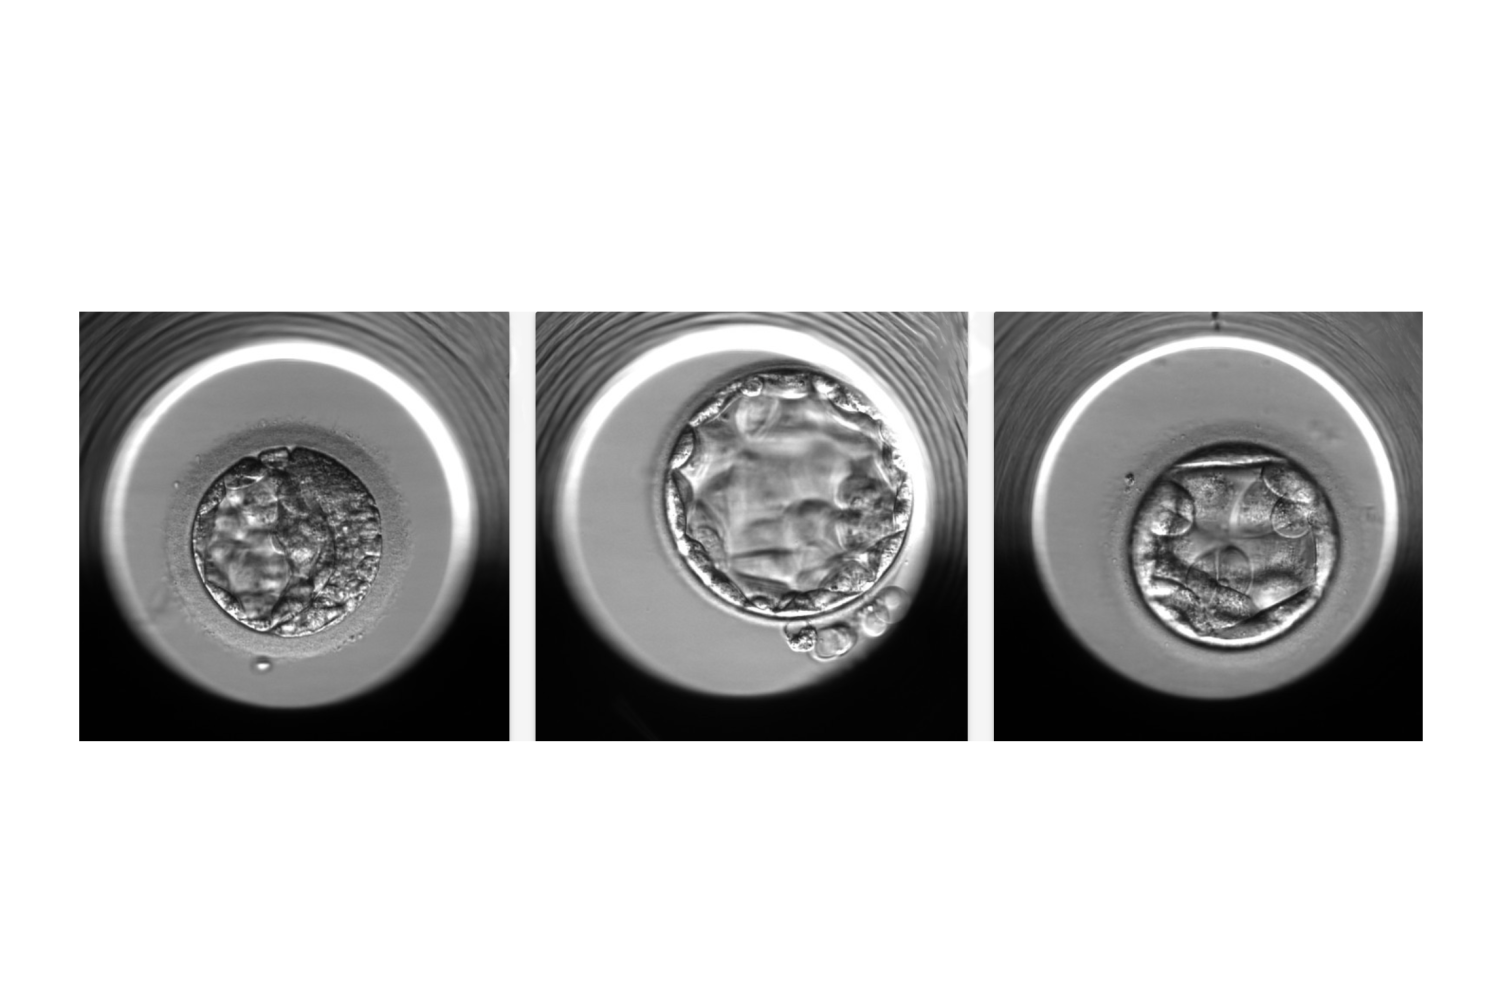 microscopic embryo images